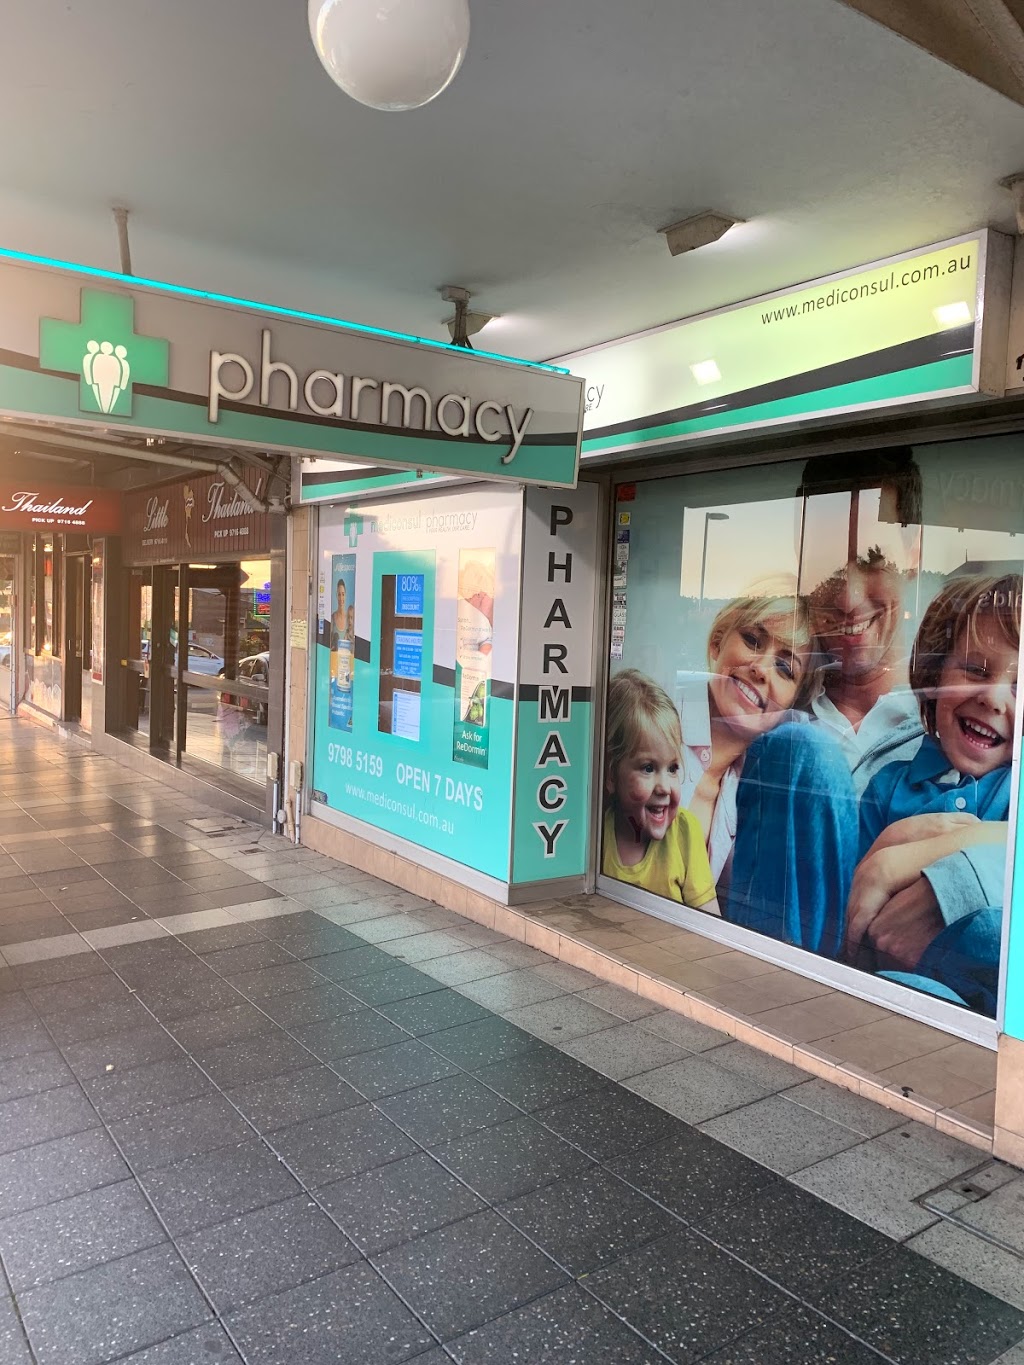 Mediconsul Simpsons Pharmacy | 121 Georges River Rd, Croydon Park NSW 2133, Australia | Phone: (02) 9798 5159